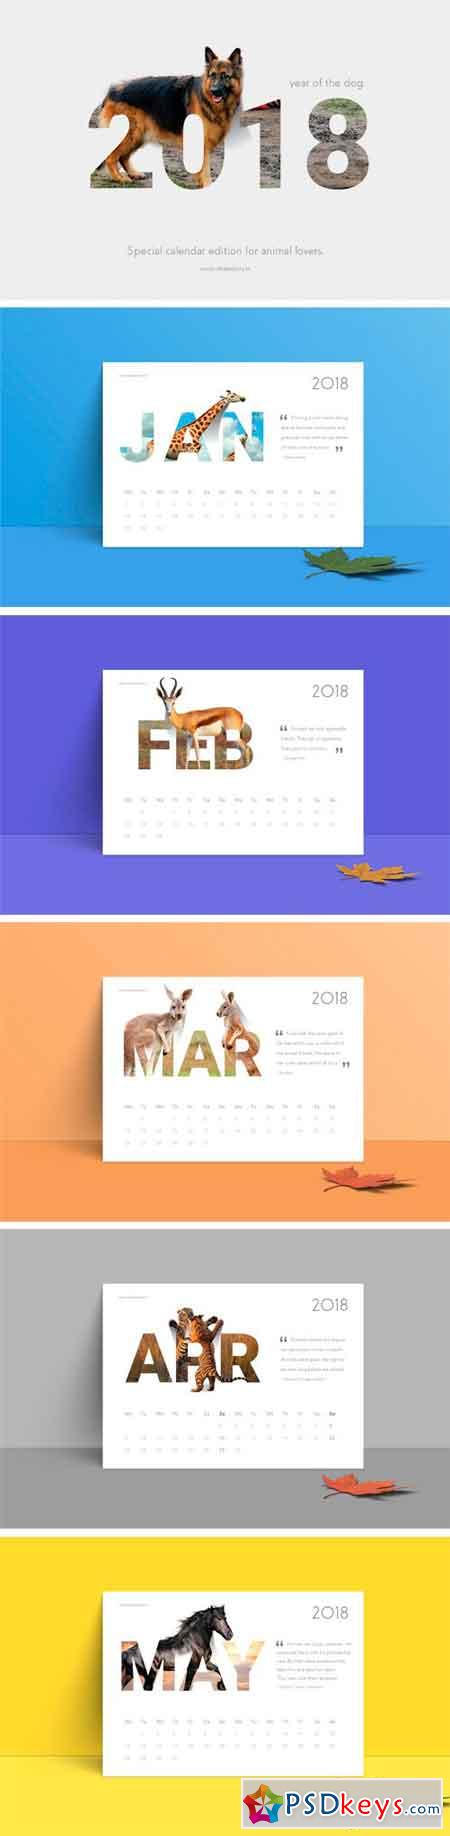 2018 Calendar Animals 2009222